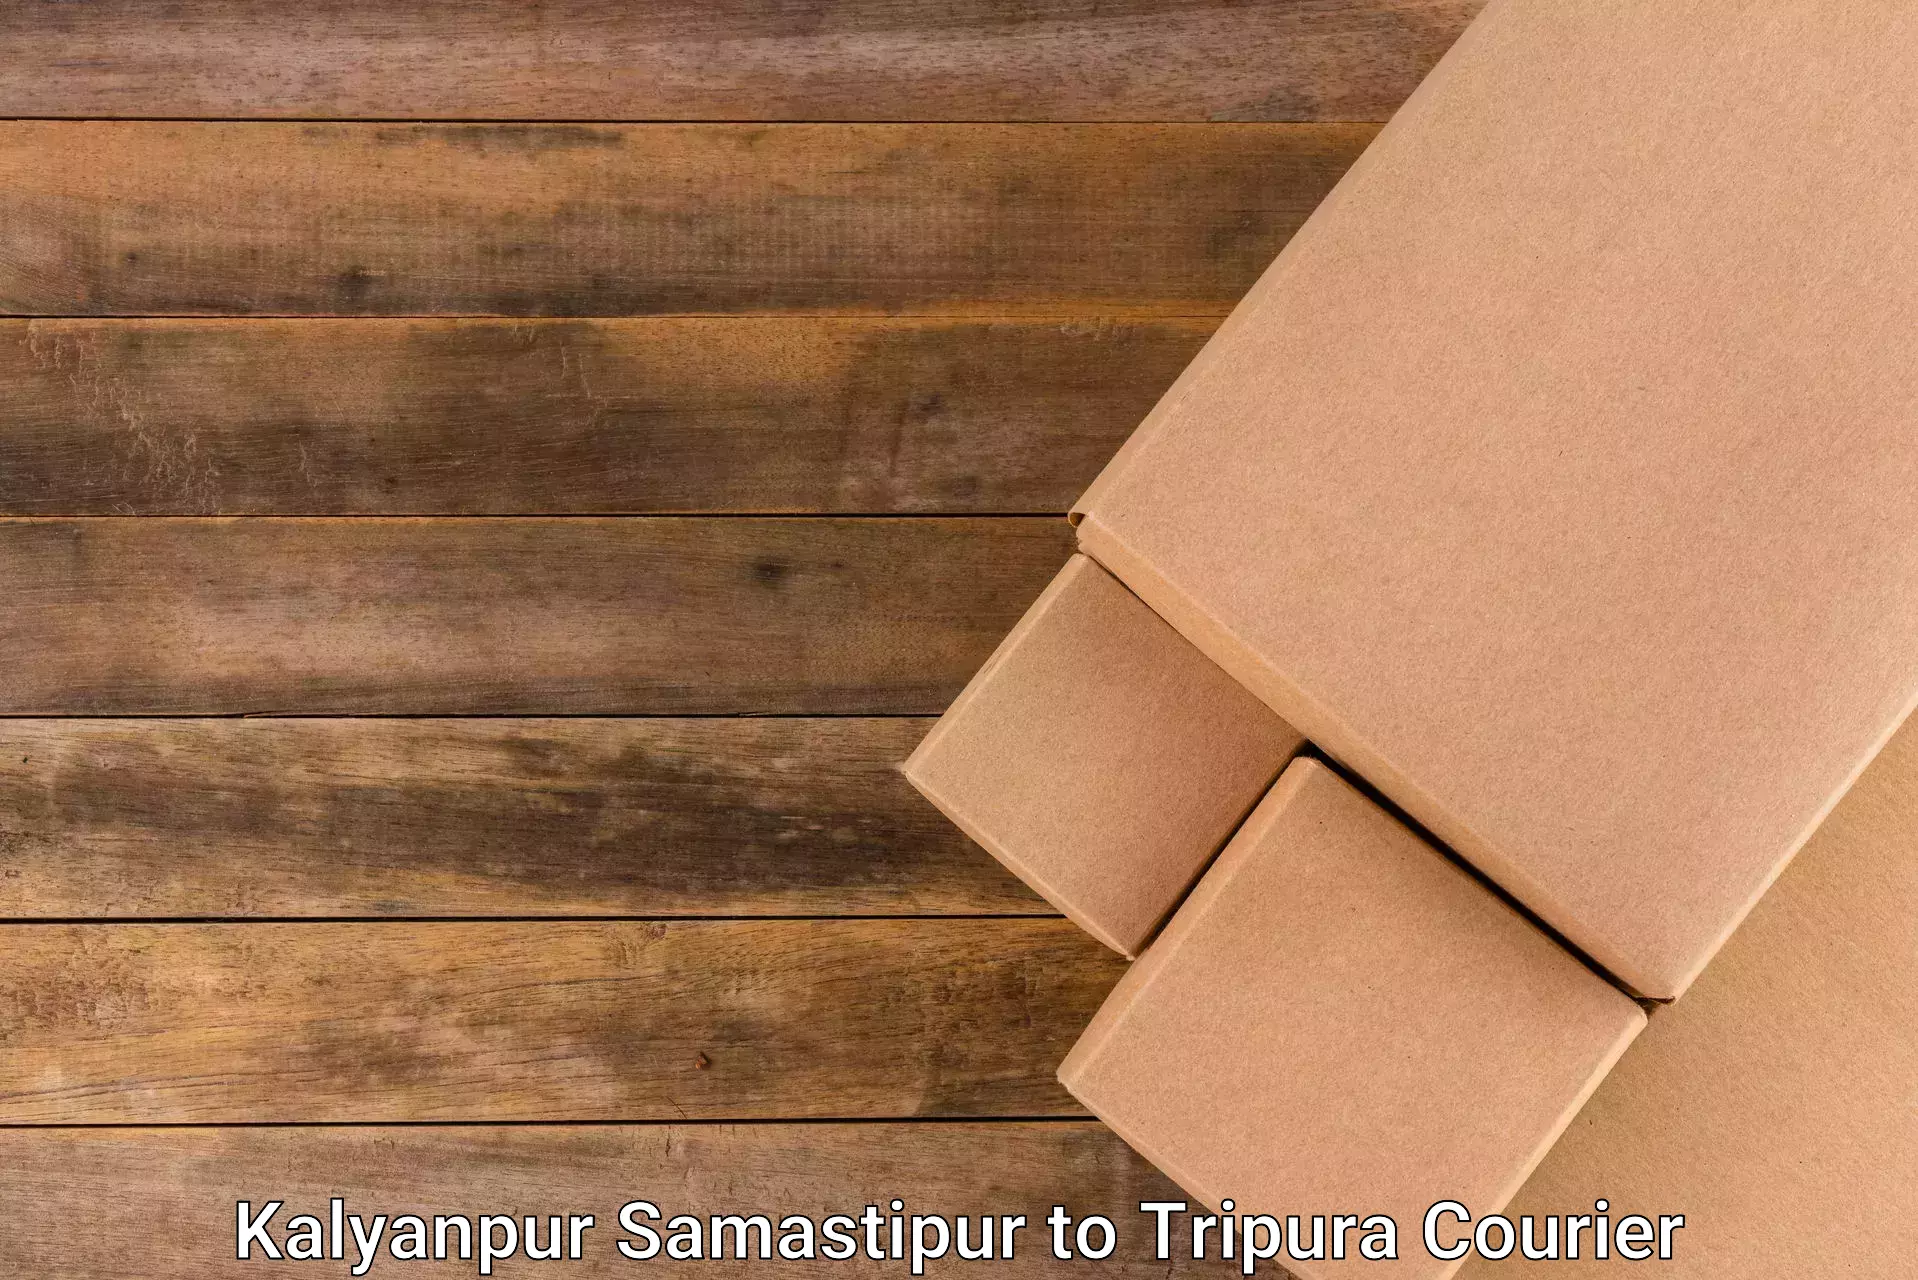 On-call courier service Kalyanpur Samastipur to Kailashahar